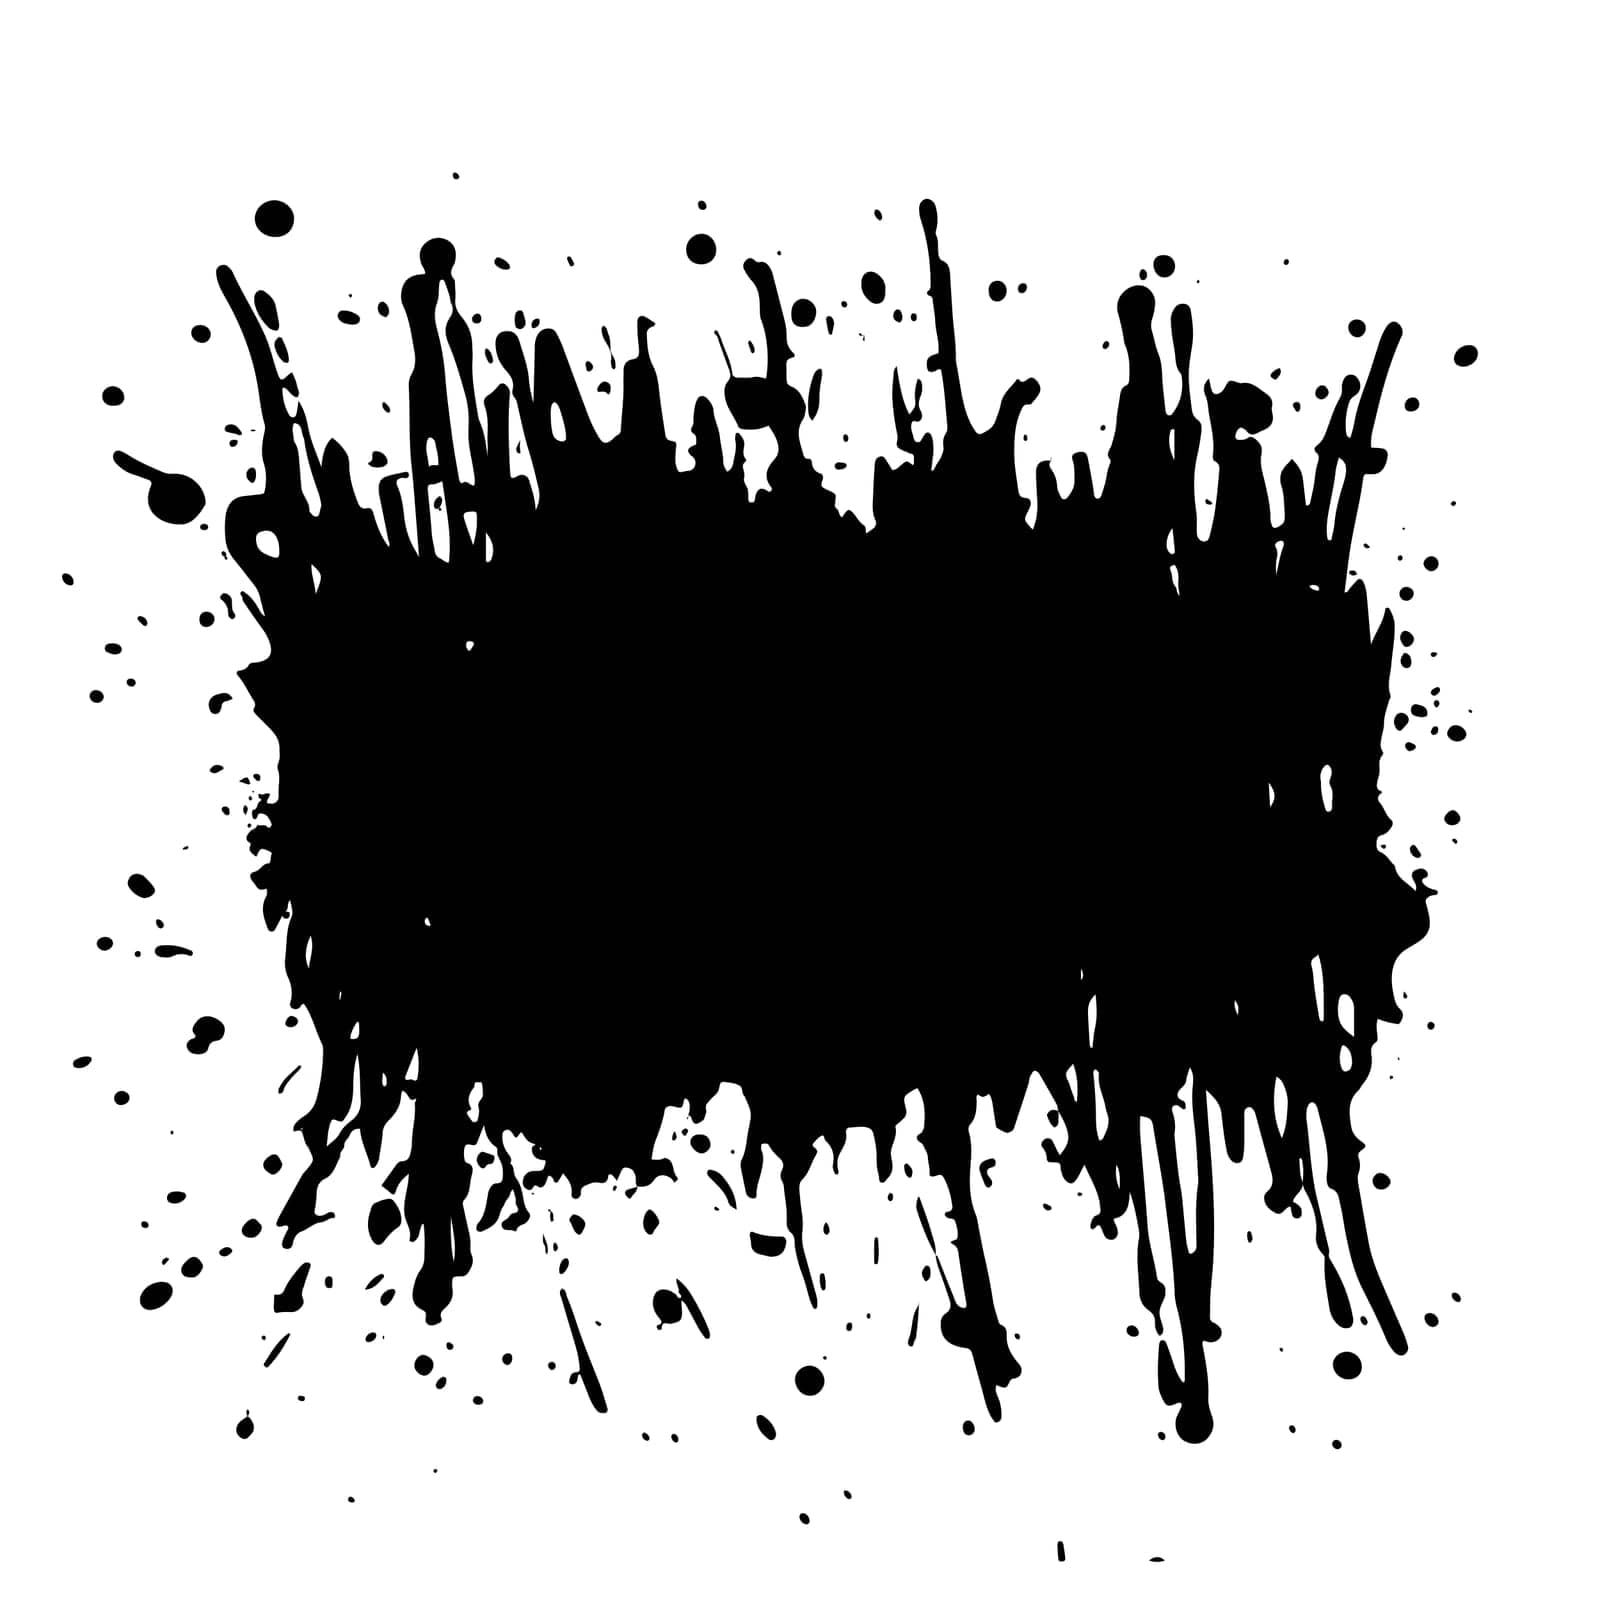 Grunge background. Abstract black grunge splashes. by Chekman